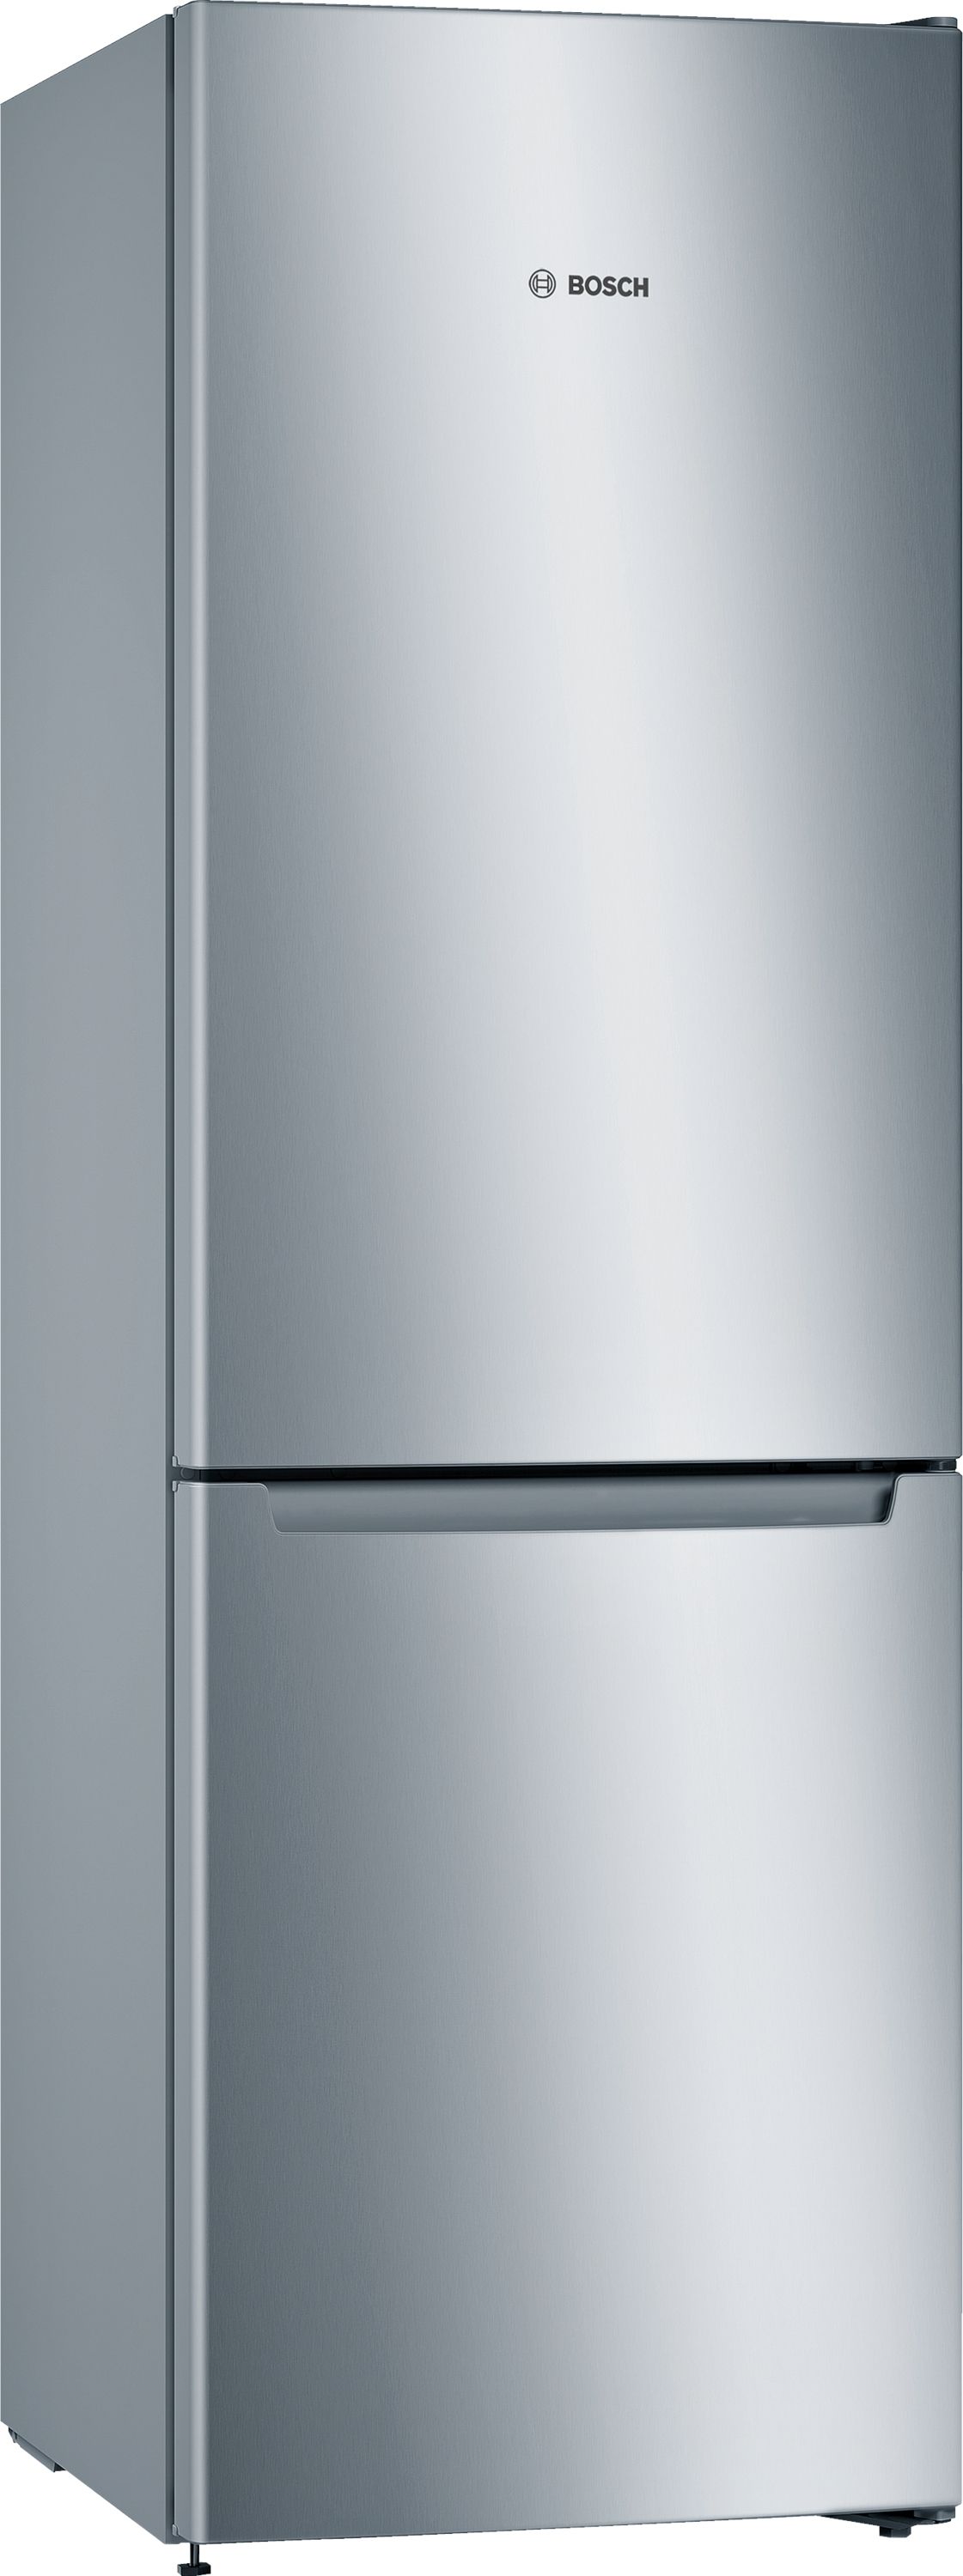 KGN33NLEB, Samostojeći frižider sa zamrzivačem dole